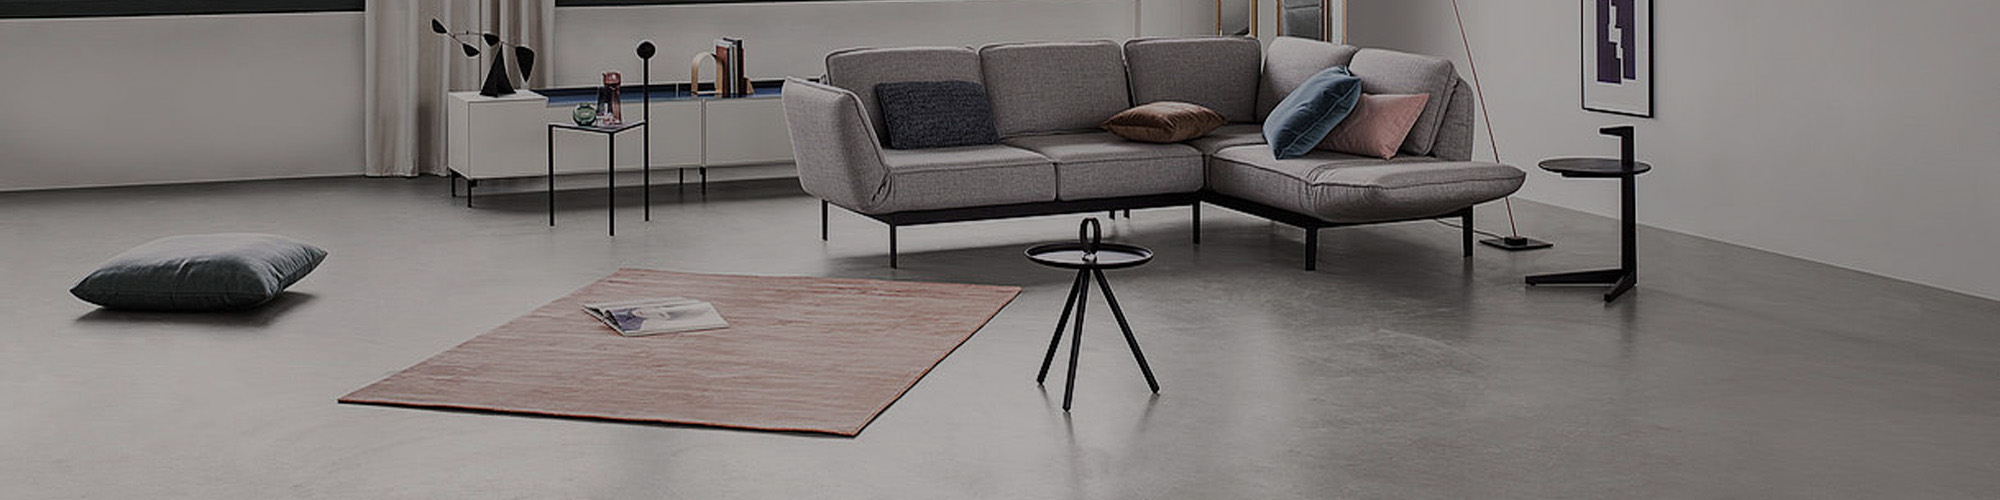 Rolf Benz Furniture